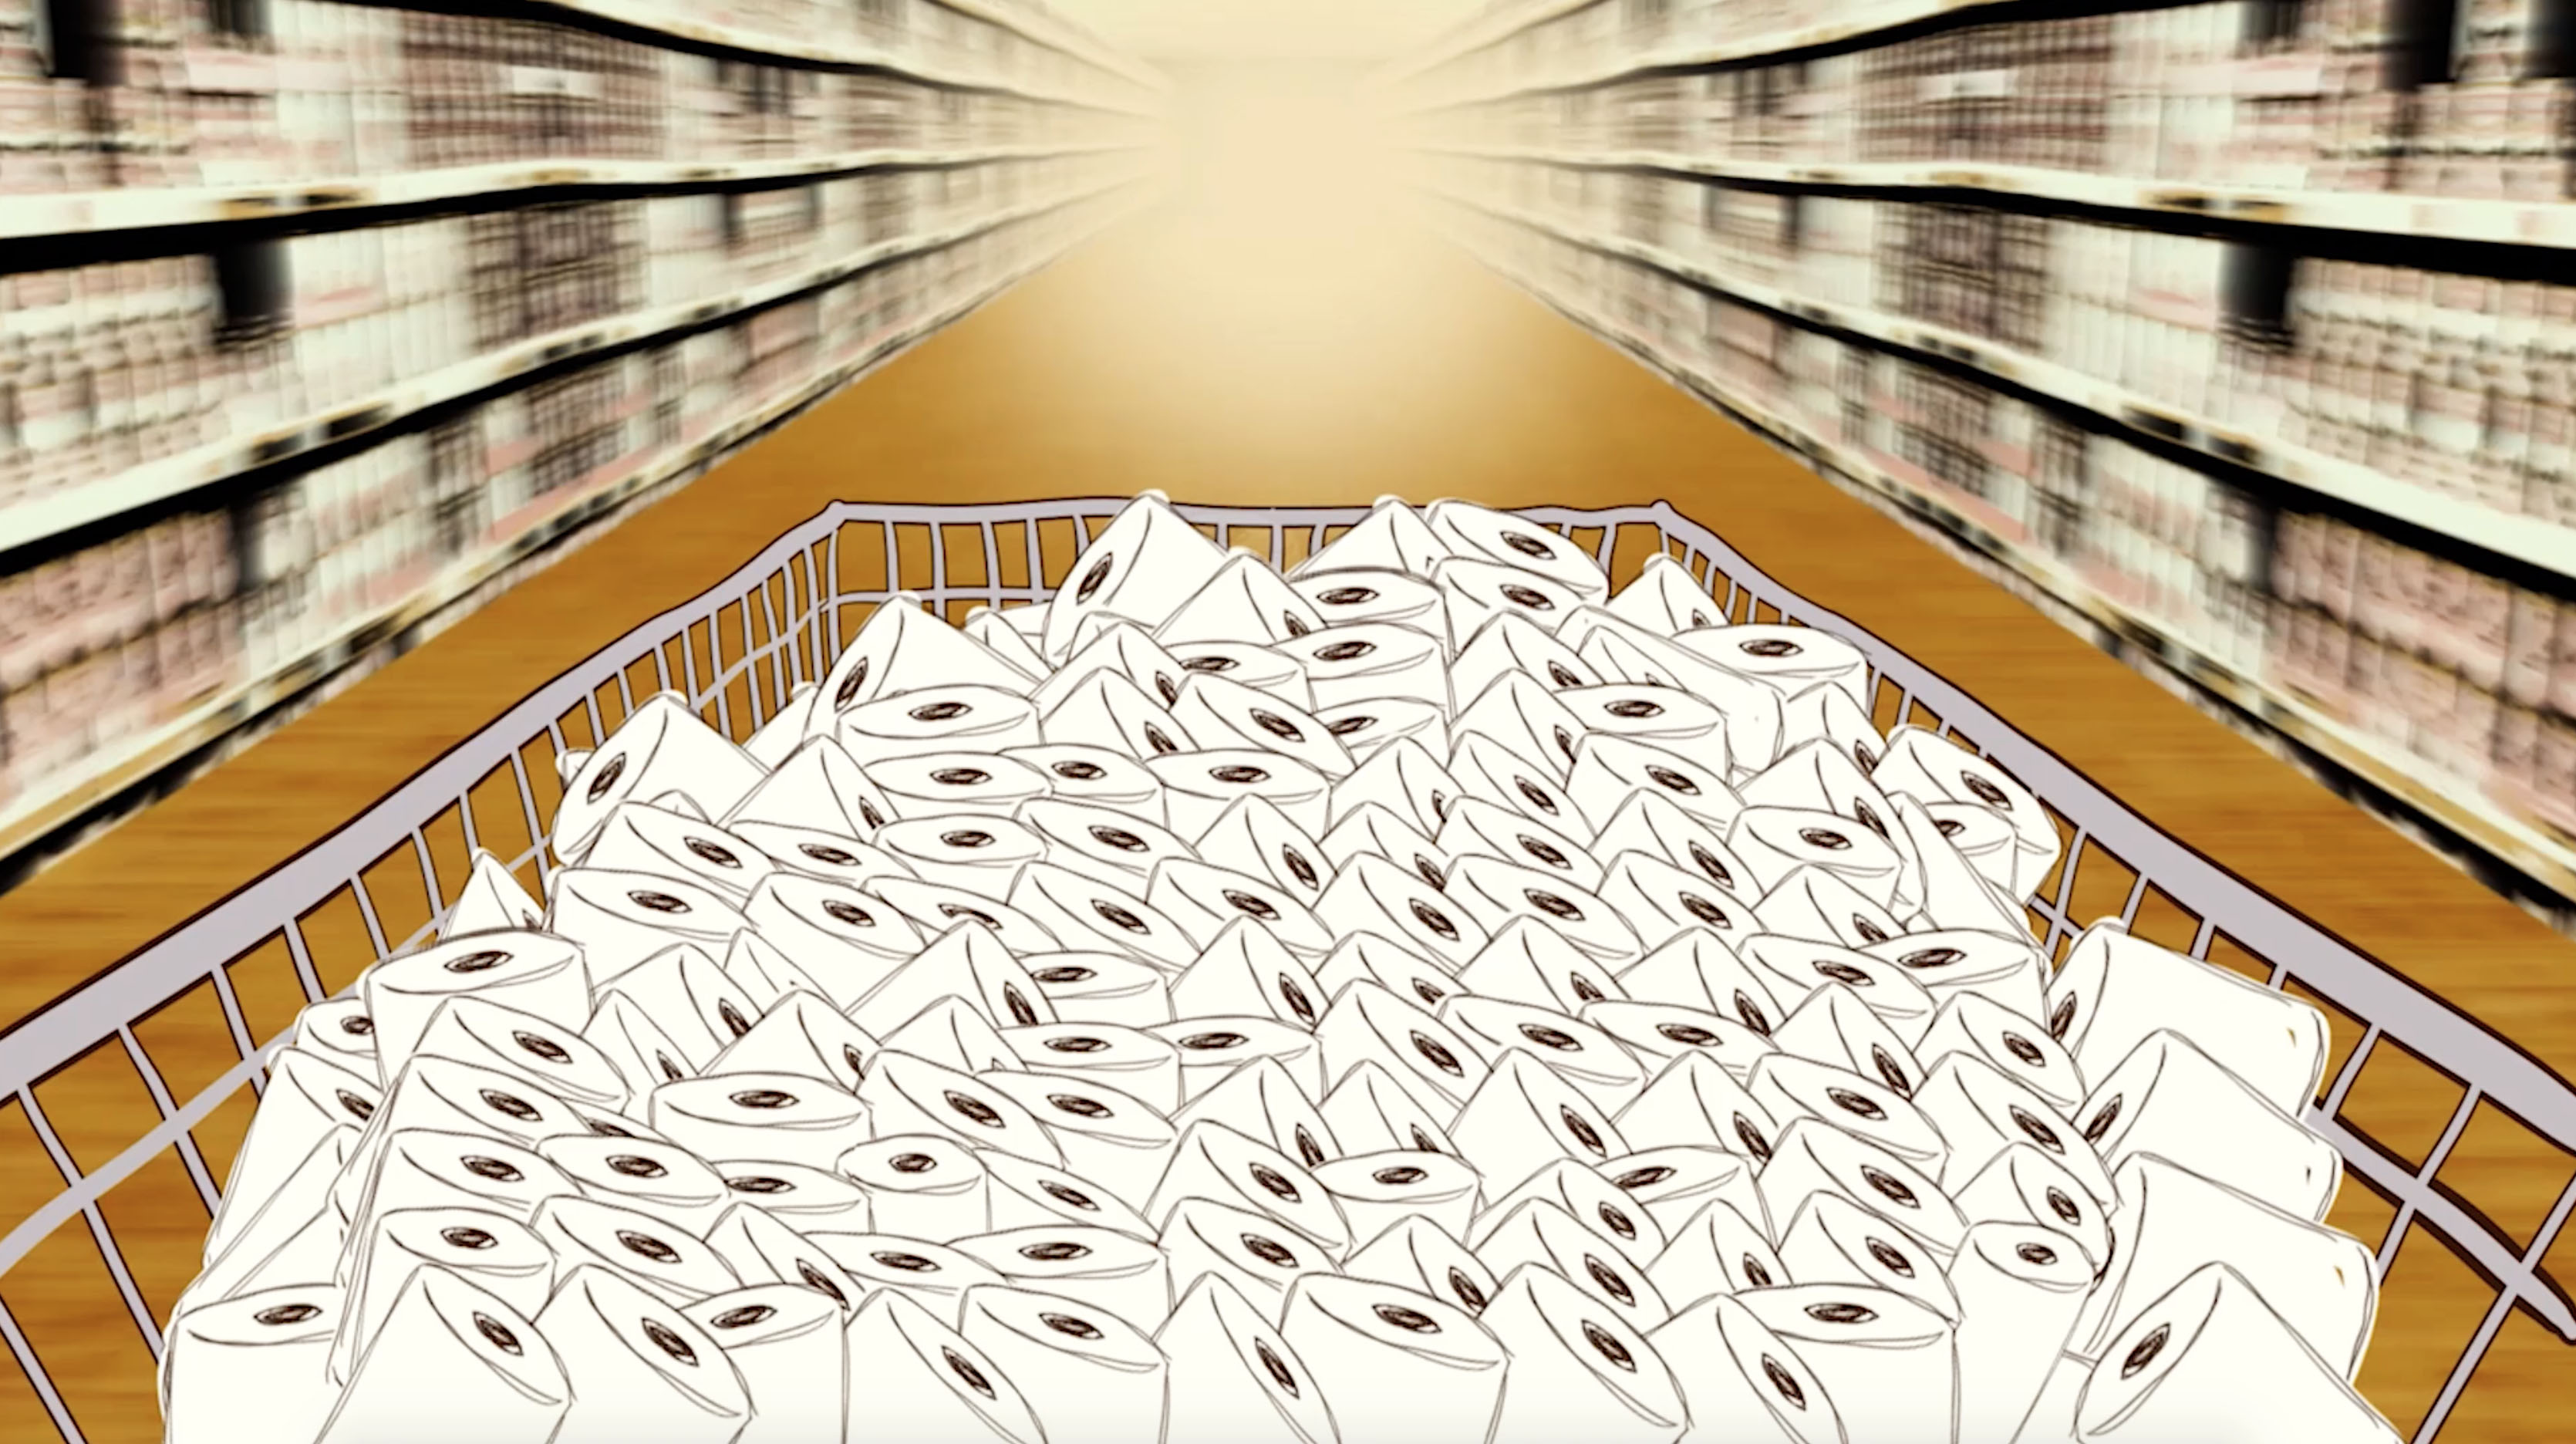 Coronavirus panic: Why are people stockpiling toilet paper?